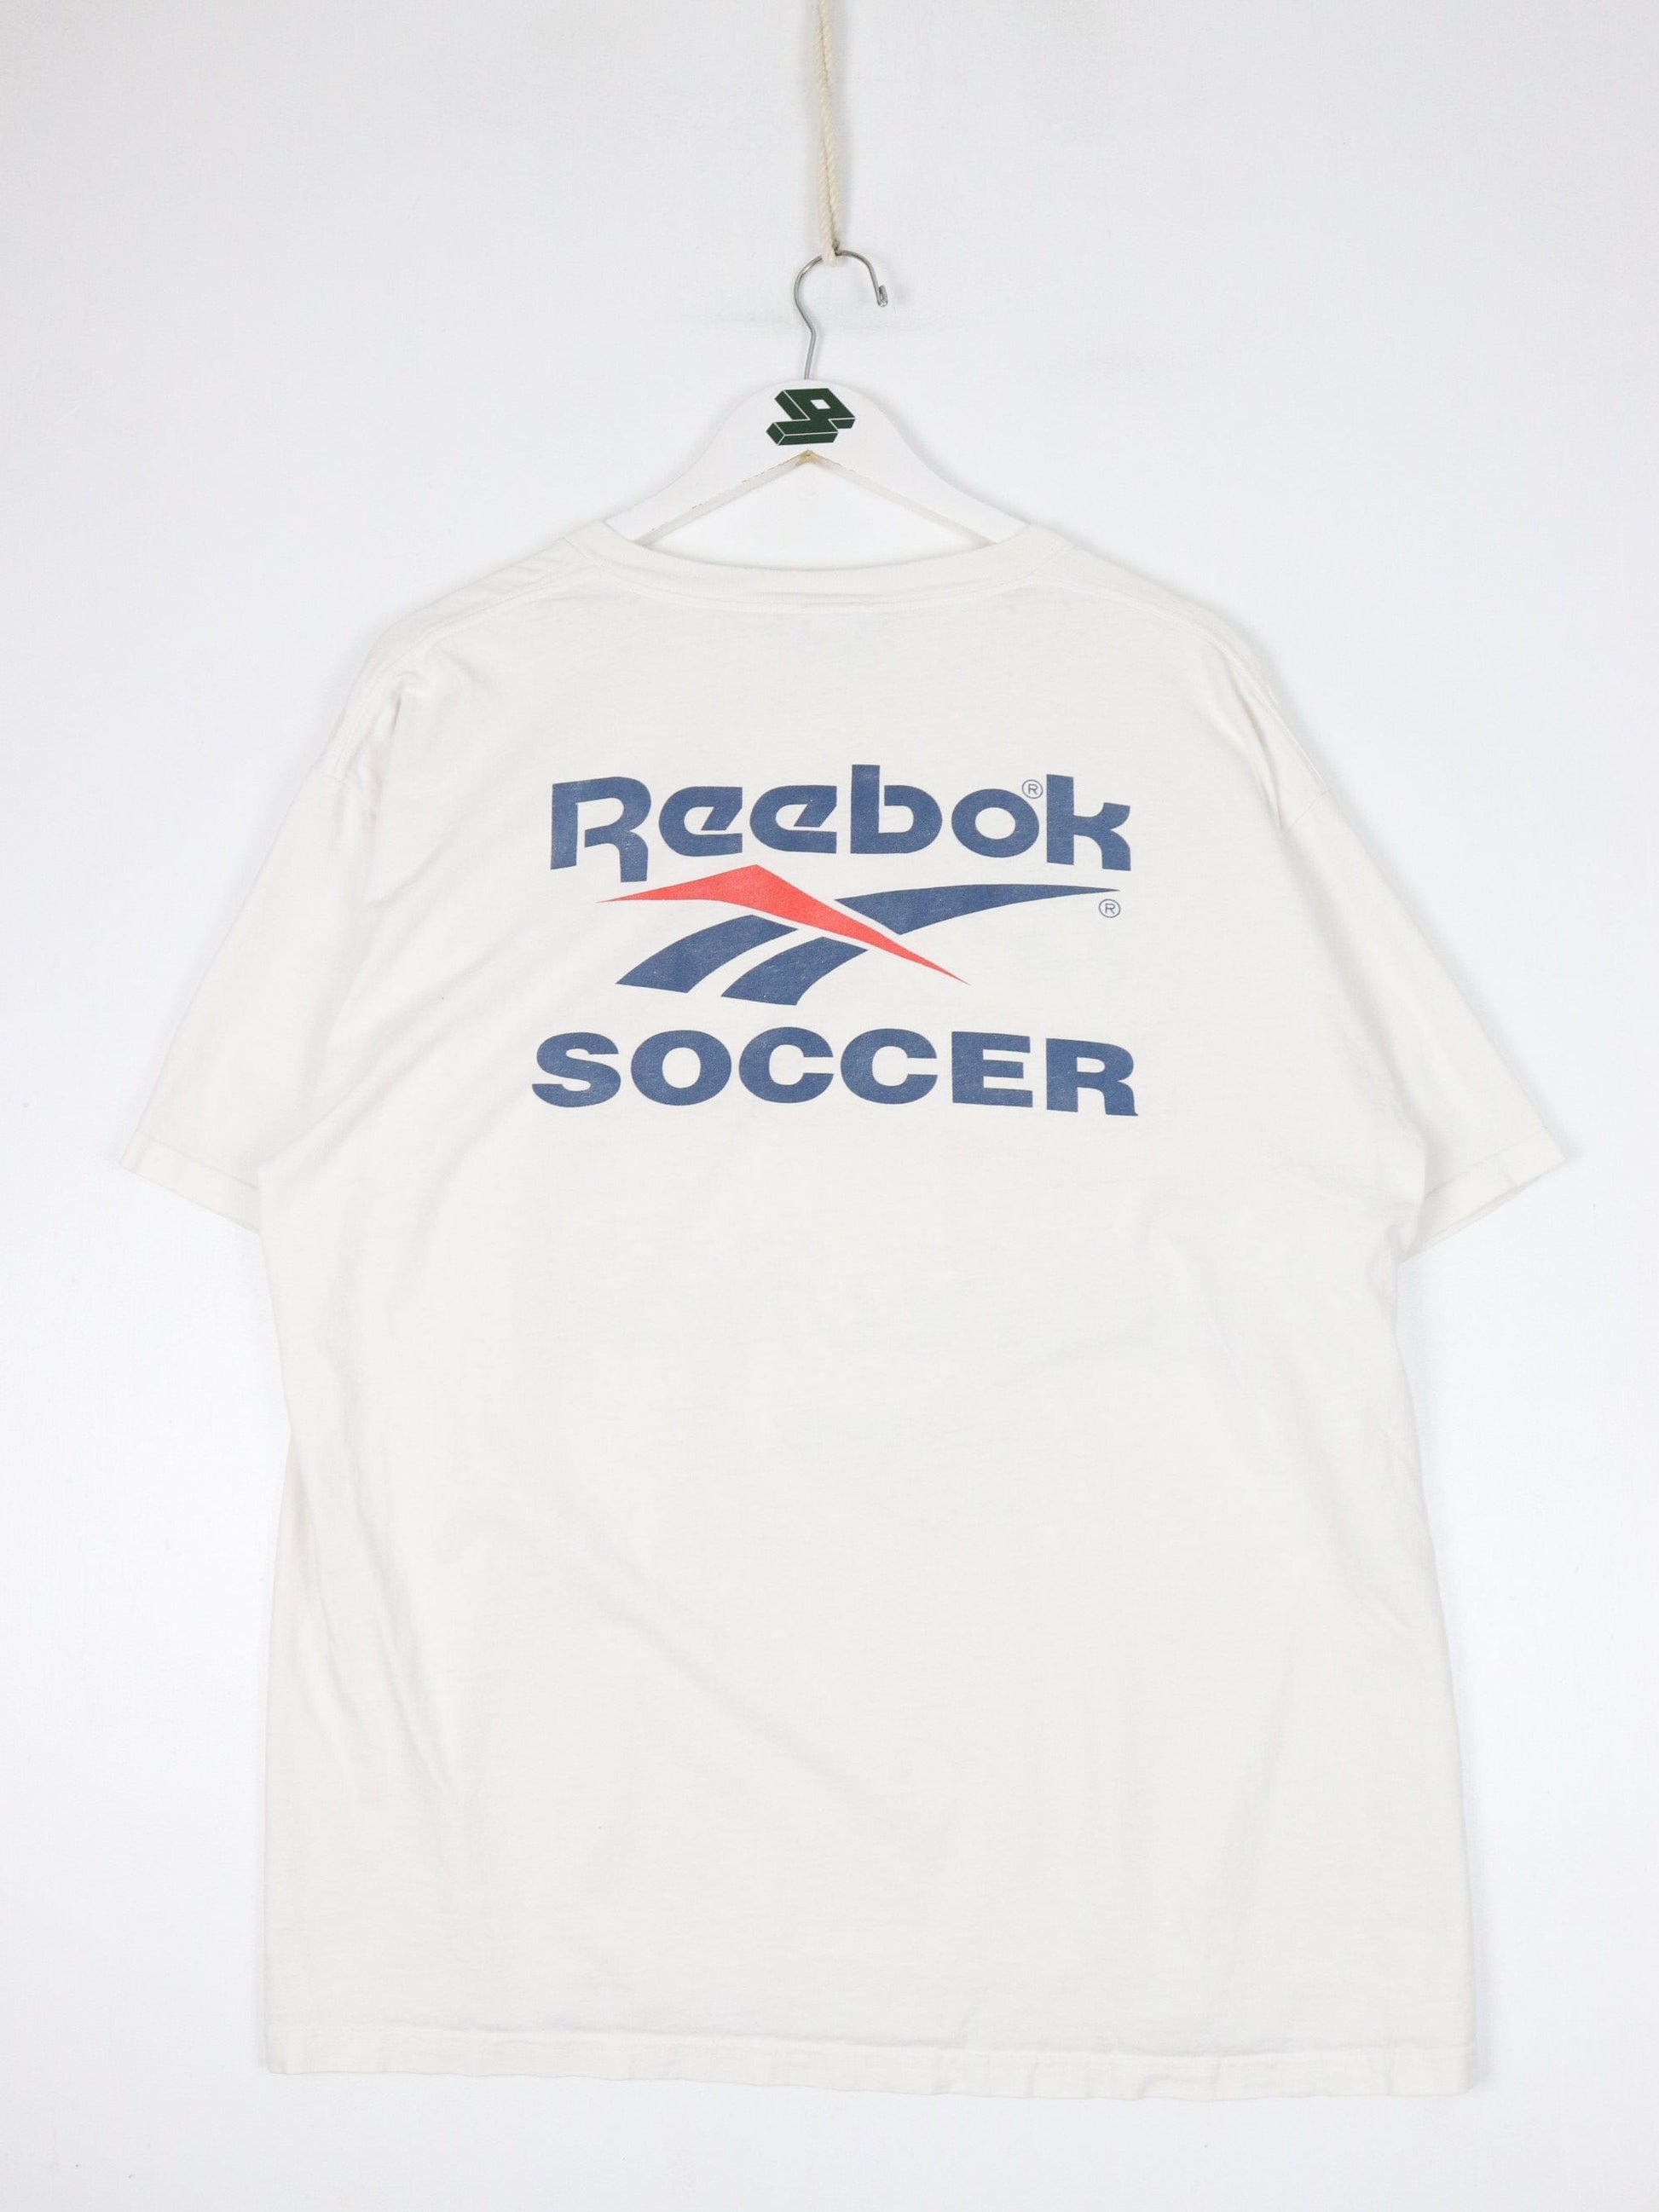 Reebok T-Shirts & Tank Tops Vintage New England Patriots T Shirt Mens XL White 90s Reebok Soccer MLS